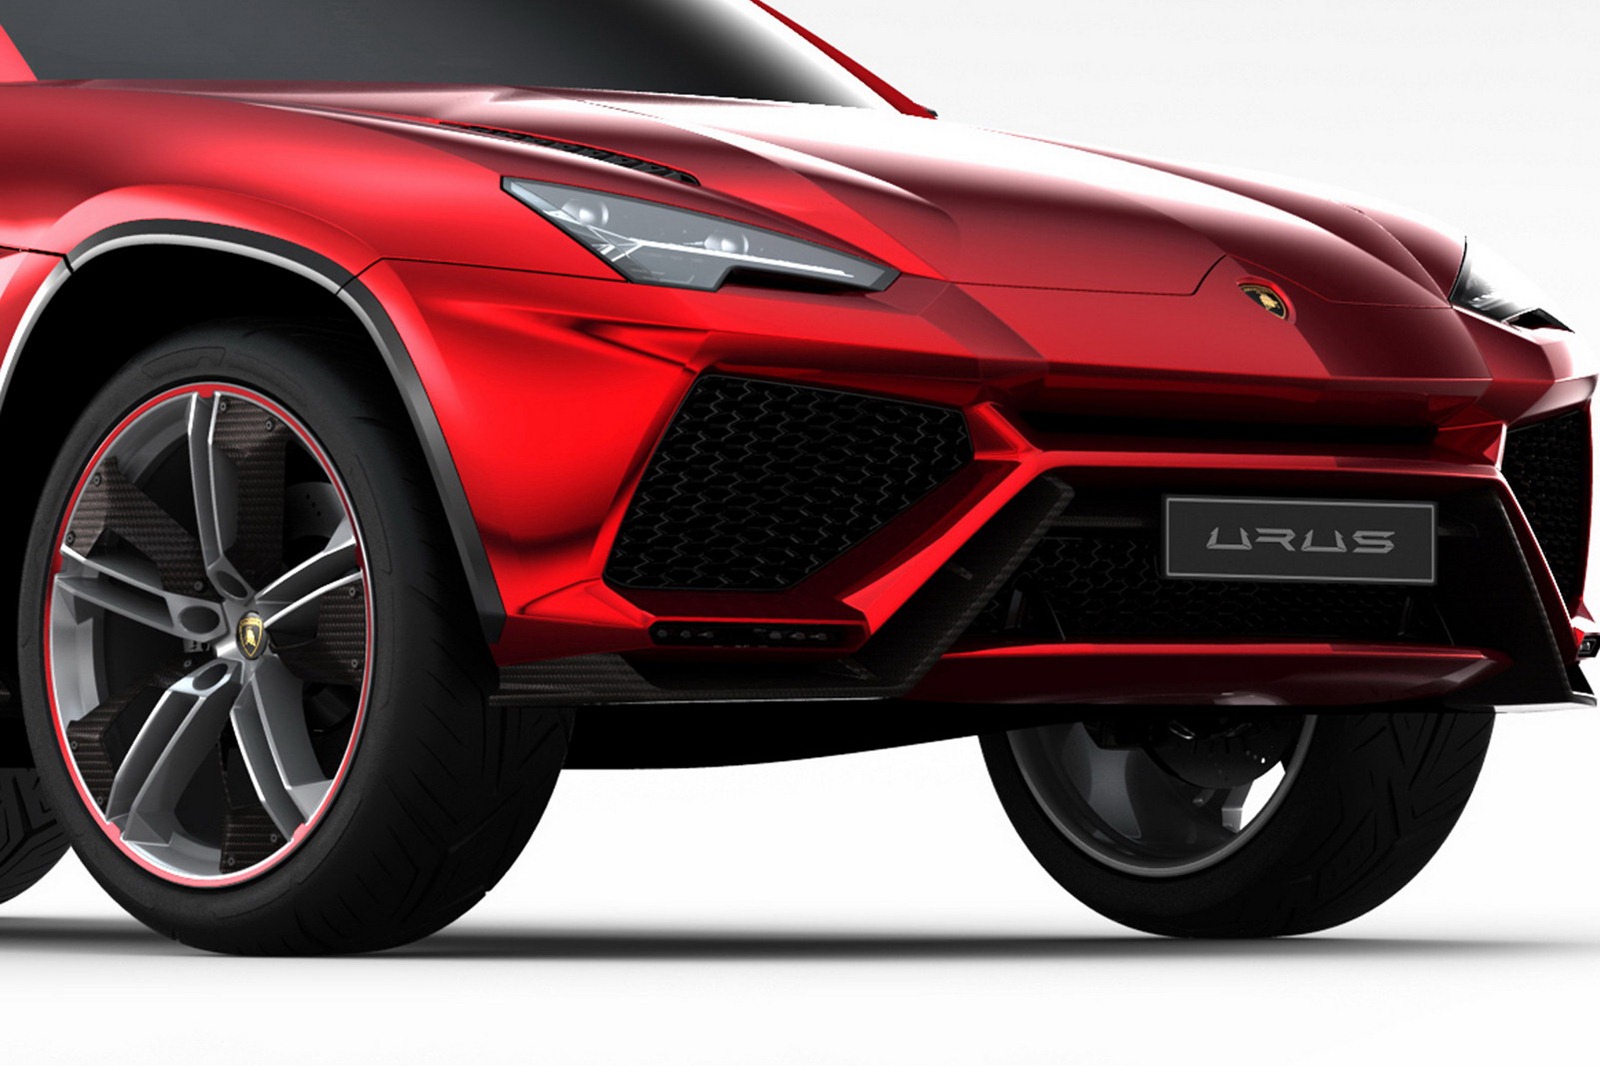 Hot cars: 2012 Lamborghini Urus Concept HD pics in Red